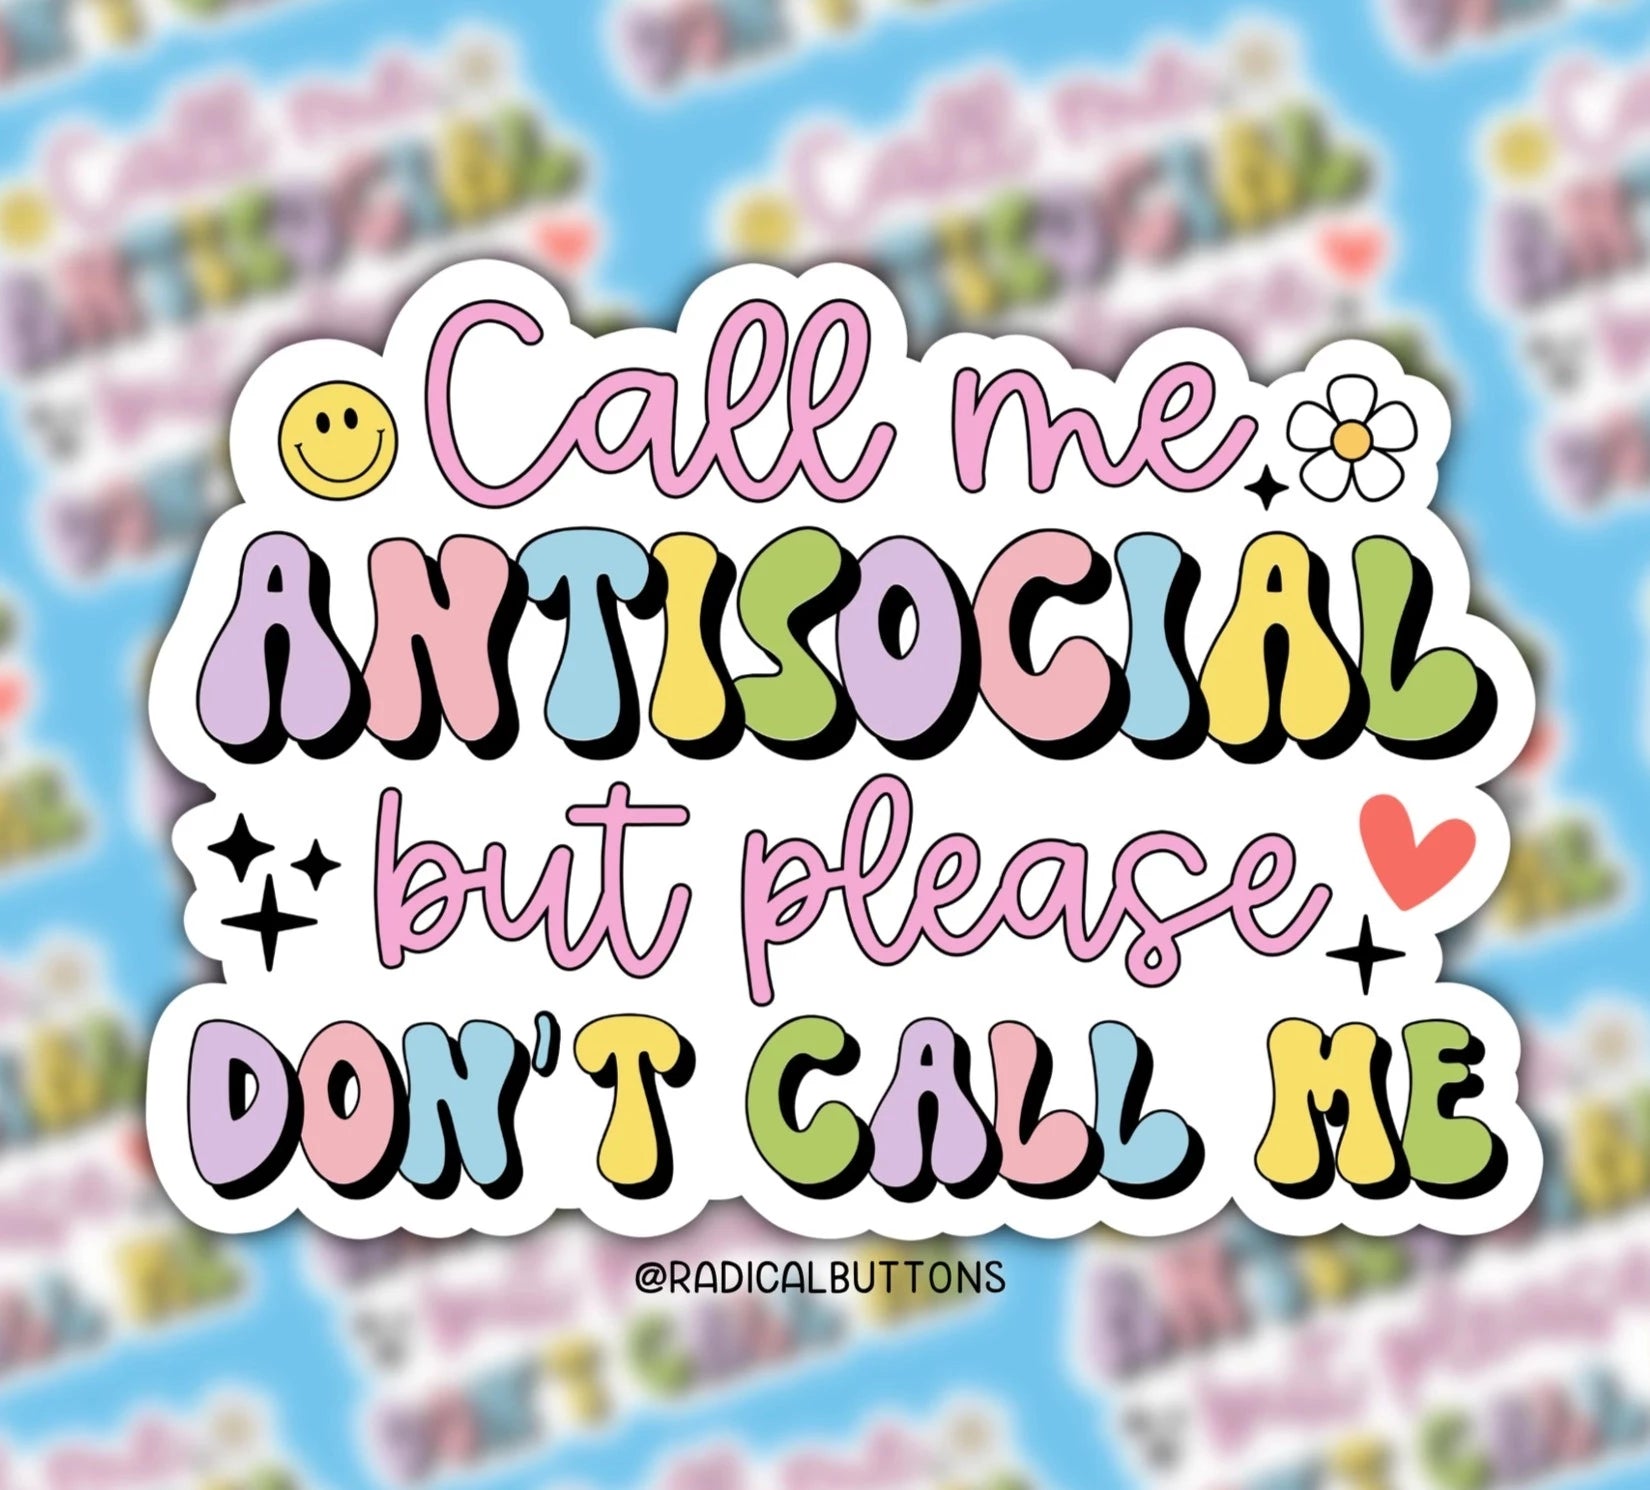 Call Me Antisocial Sticker